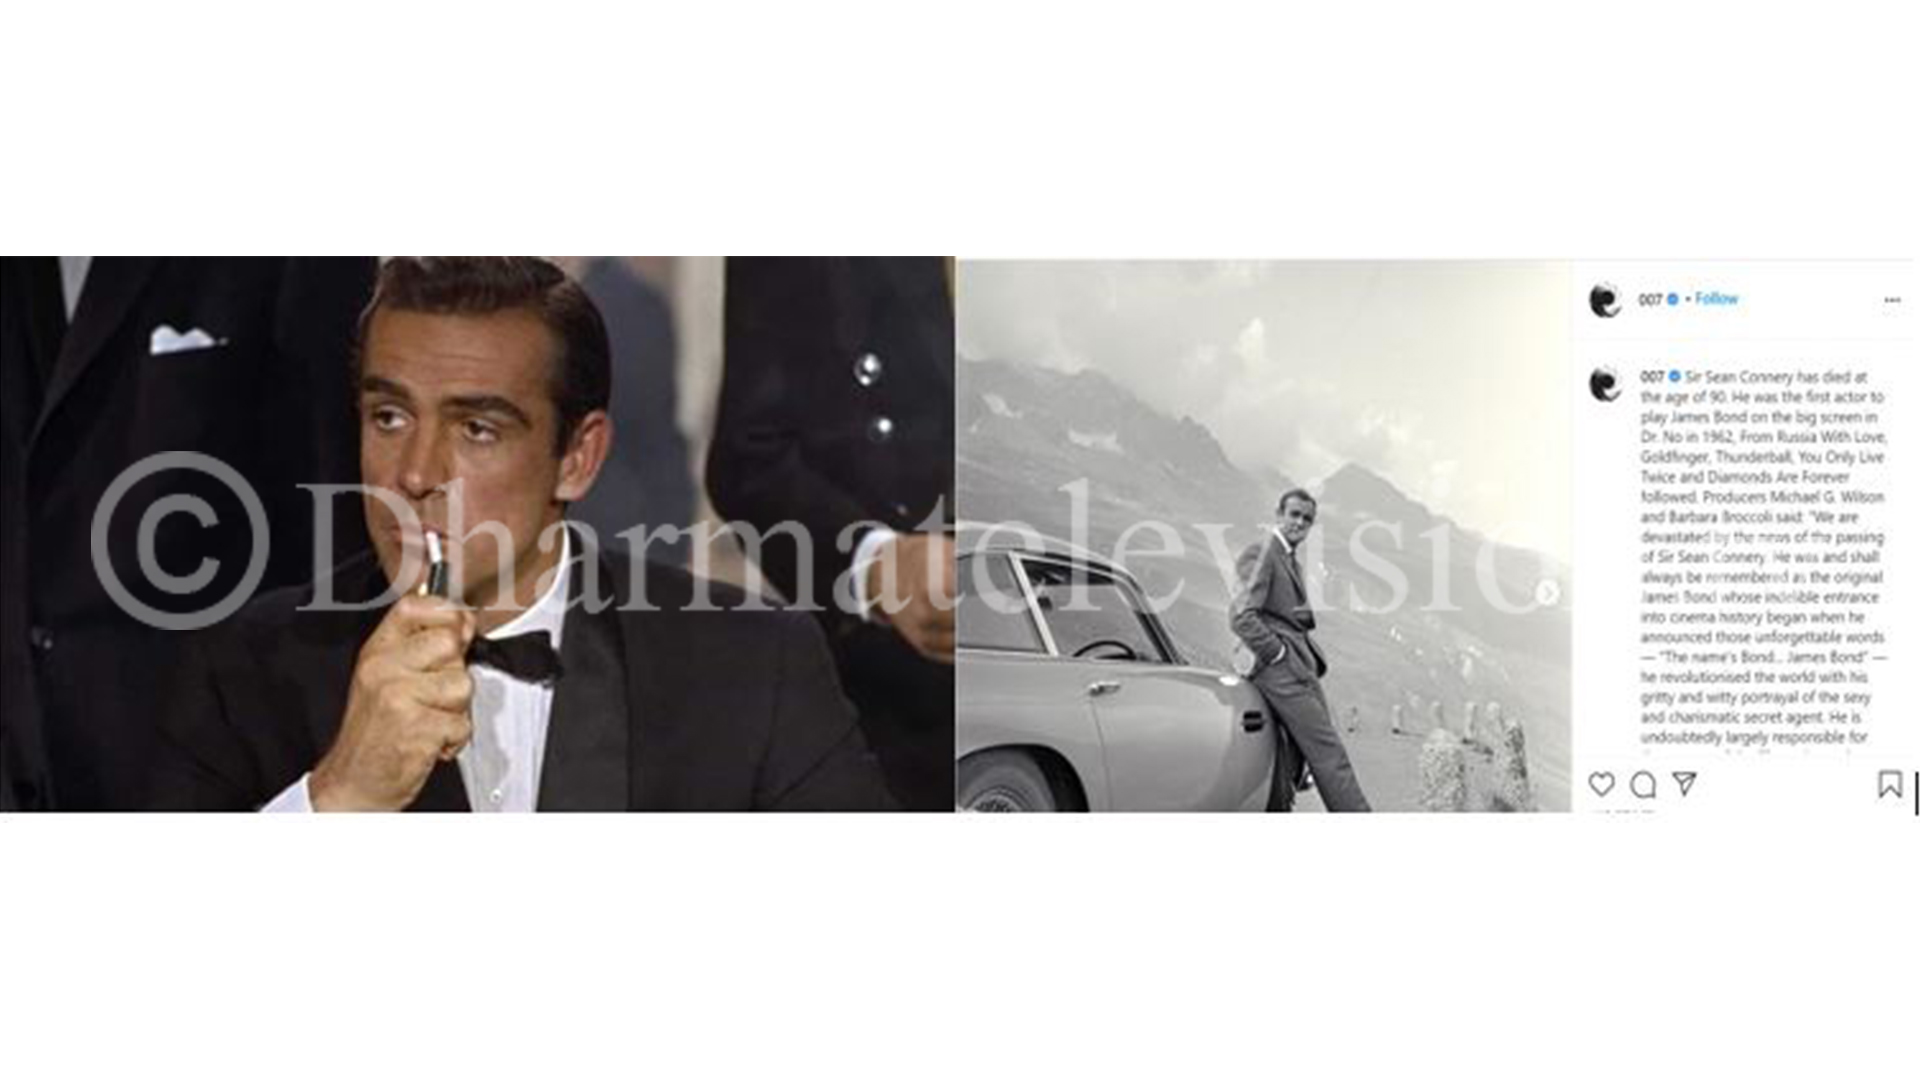 James Bond Actor Sean Connery, dies at 90